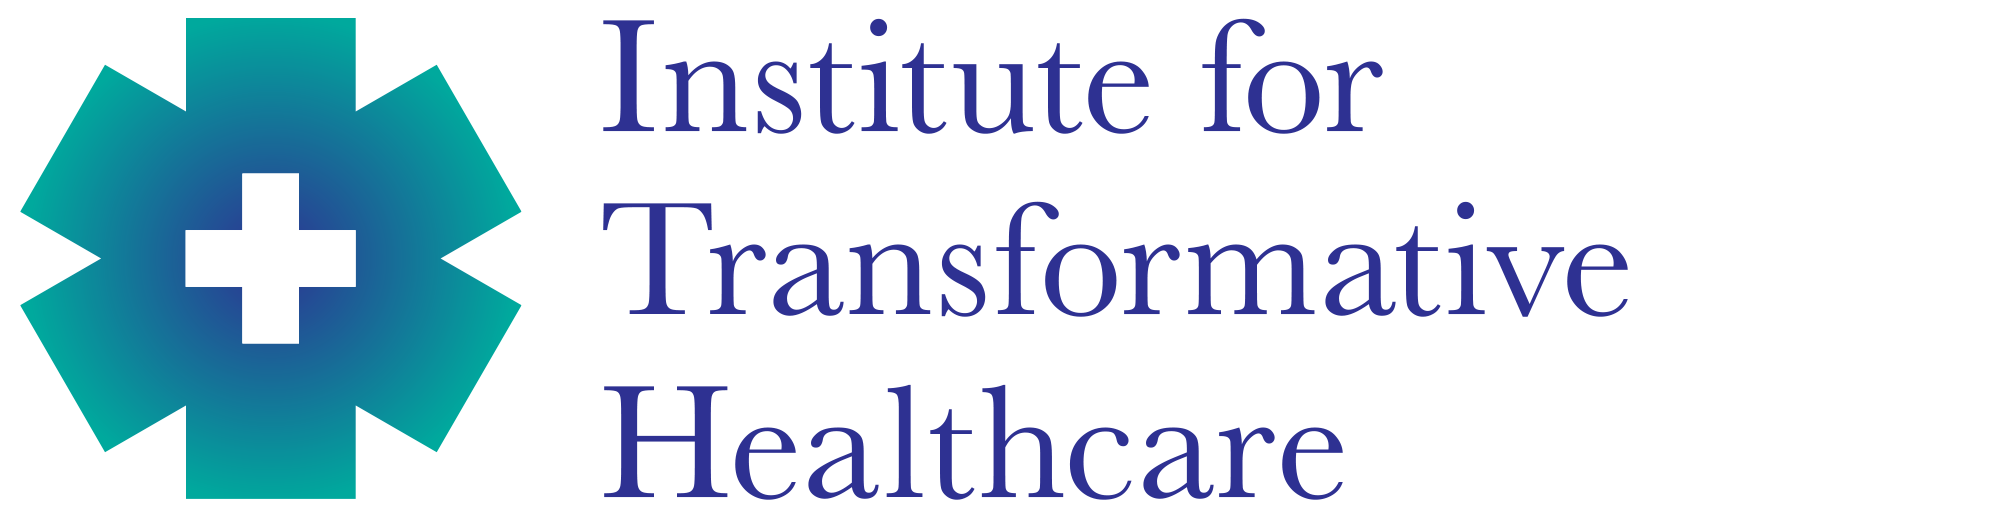 Institute for Transformative Healthcare